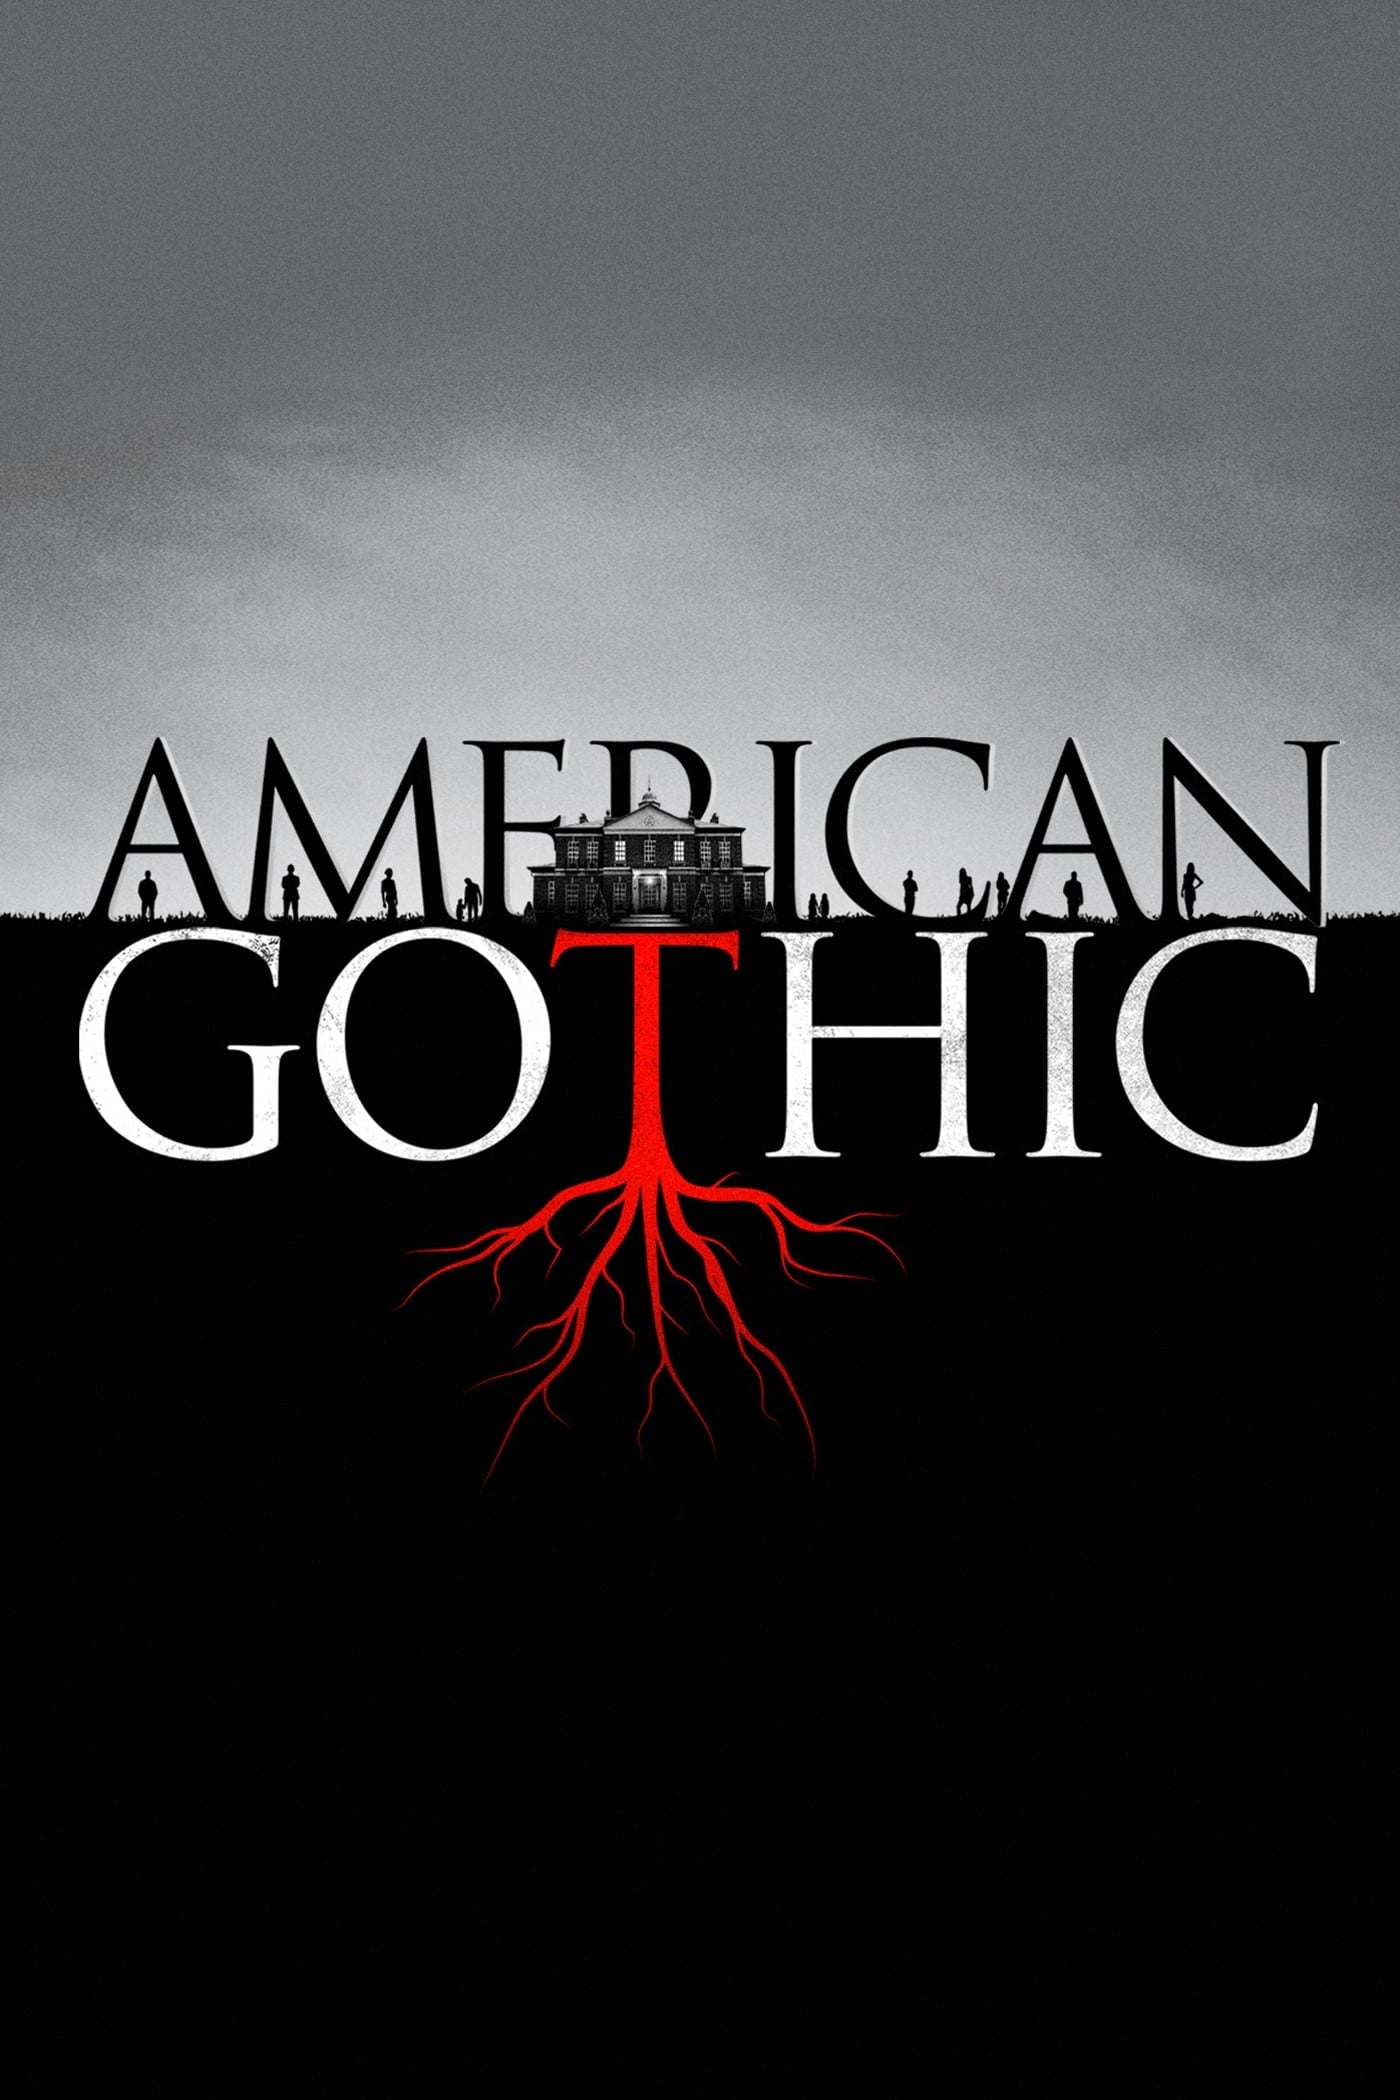 Plakát pro film “American Gothic”